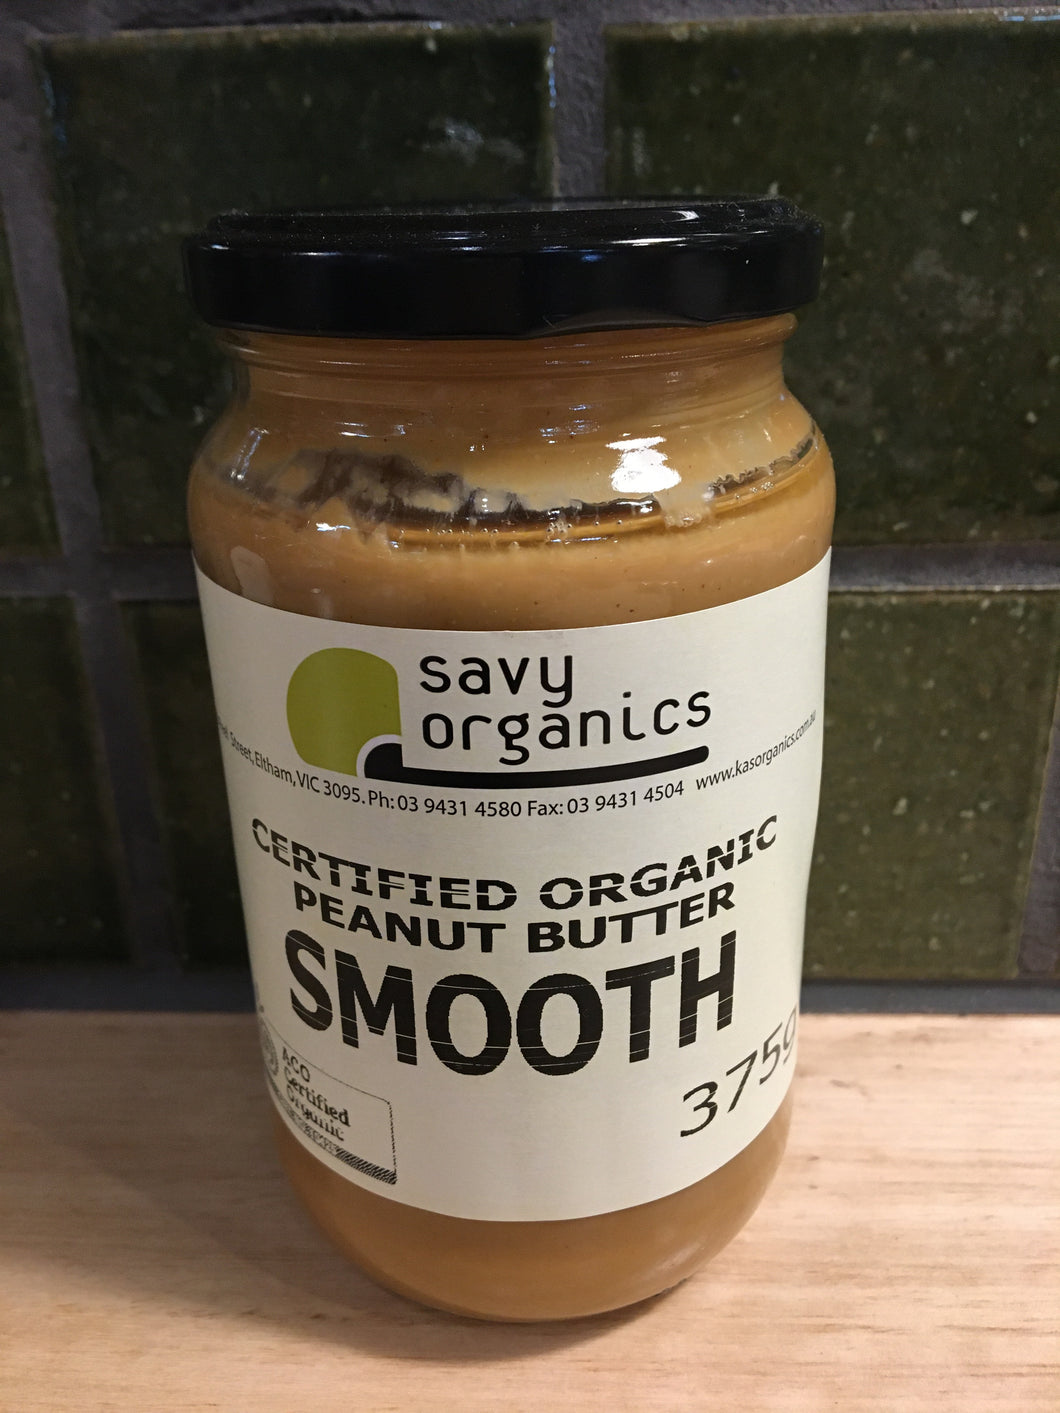 Savy Organics Smooth Peanut Butter 375g